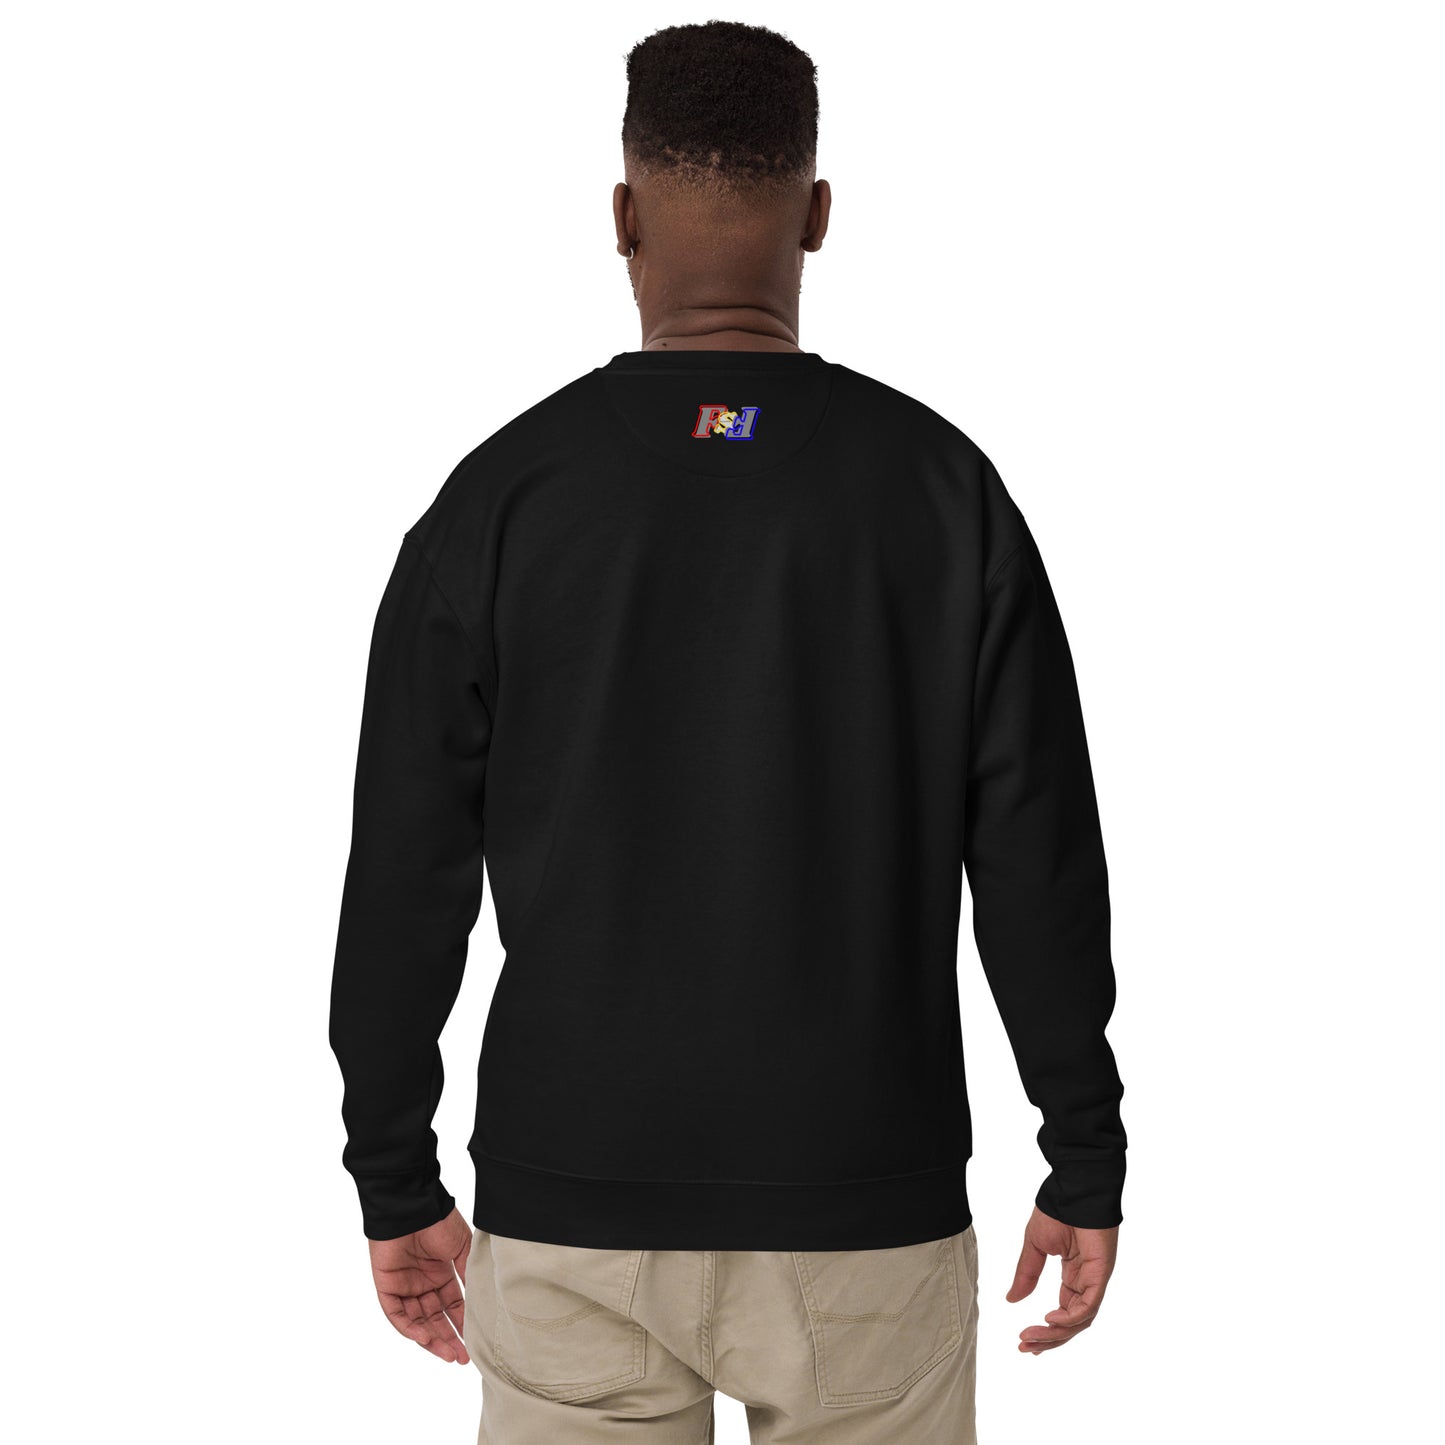 Unisex Premium Sweatshirt - FSF Logo 'Multi-Stack'